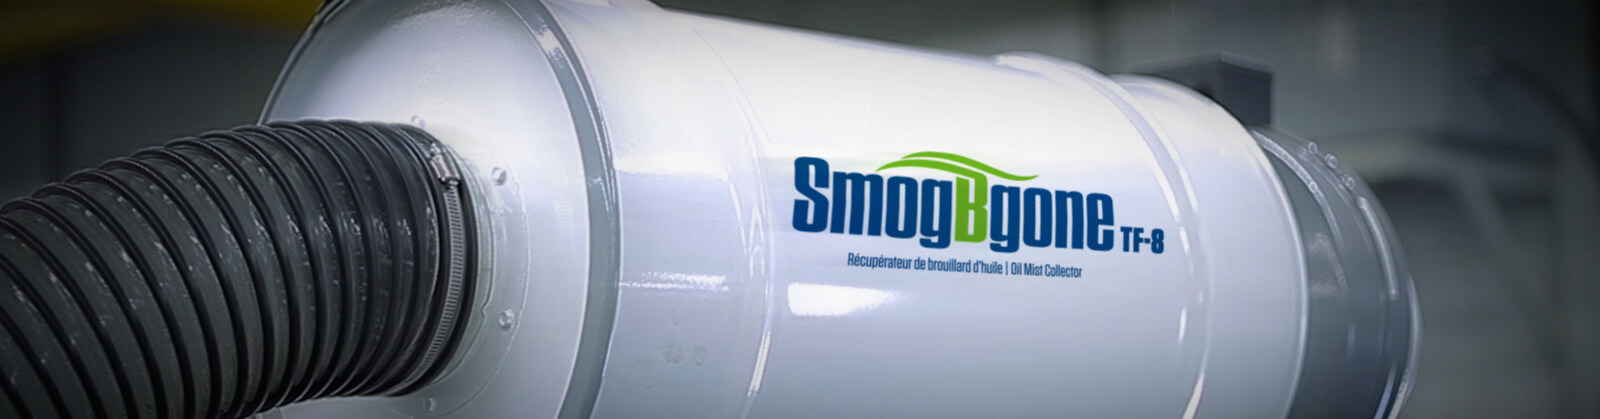 SmogBgone : Récupérateur de brouillard d’huile